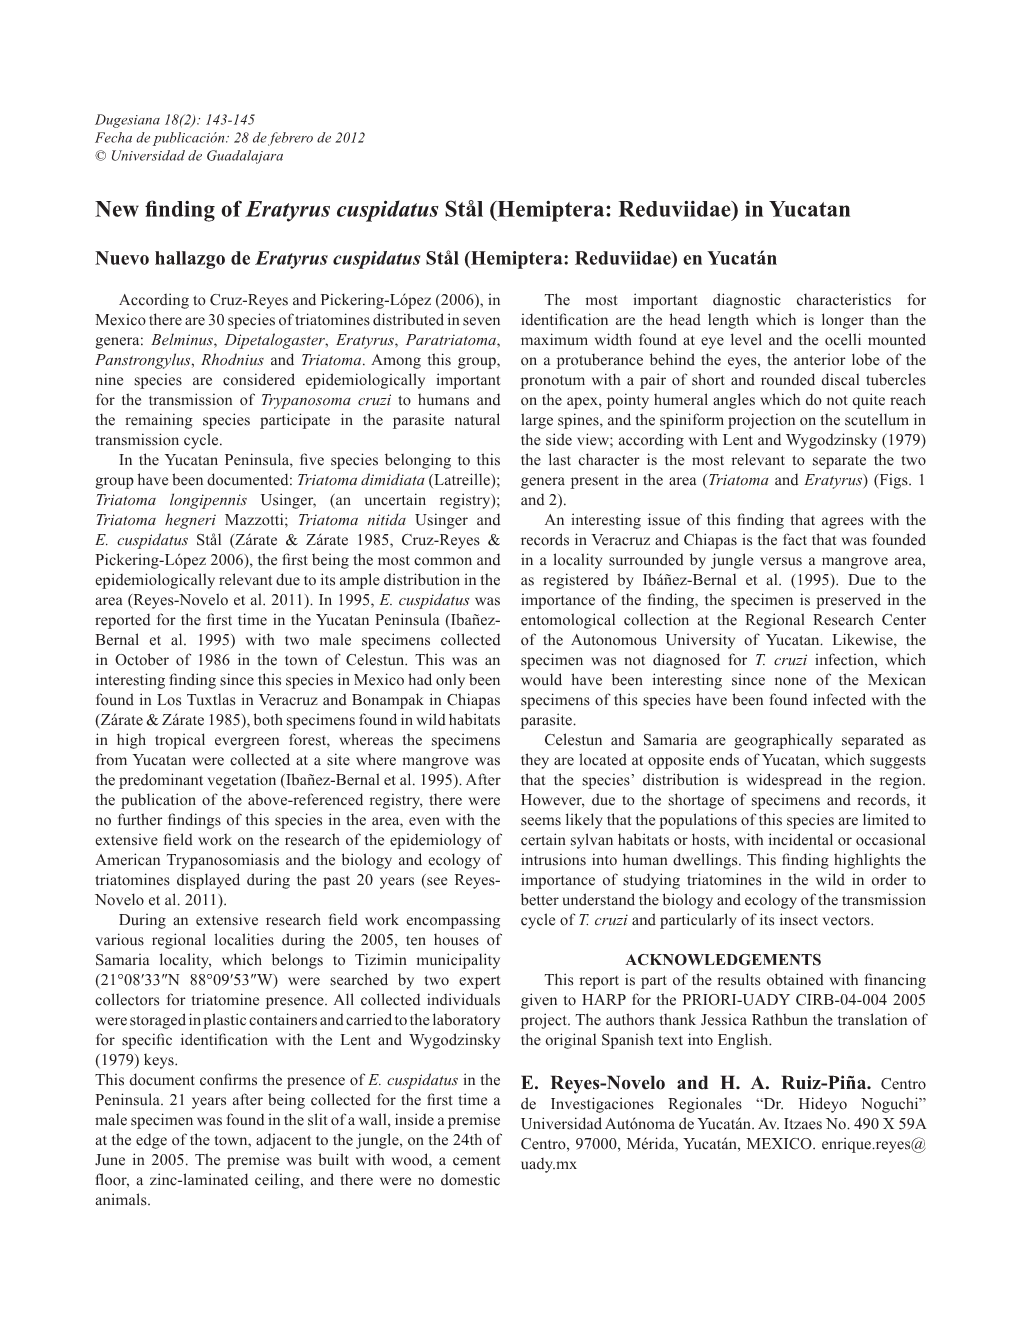 New Finding of Eratyrus Cuspidatus Stål (Hemiptera: Reduviidae) in Yucatan